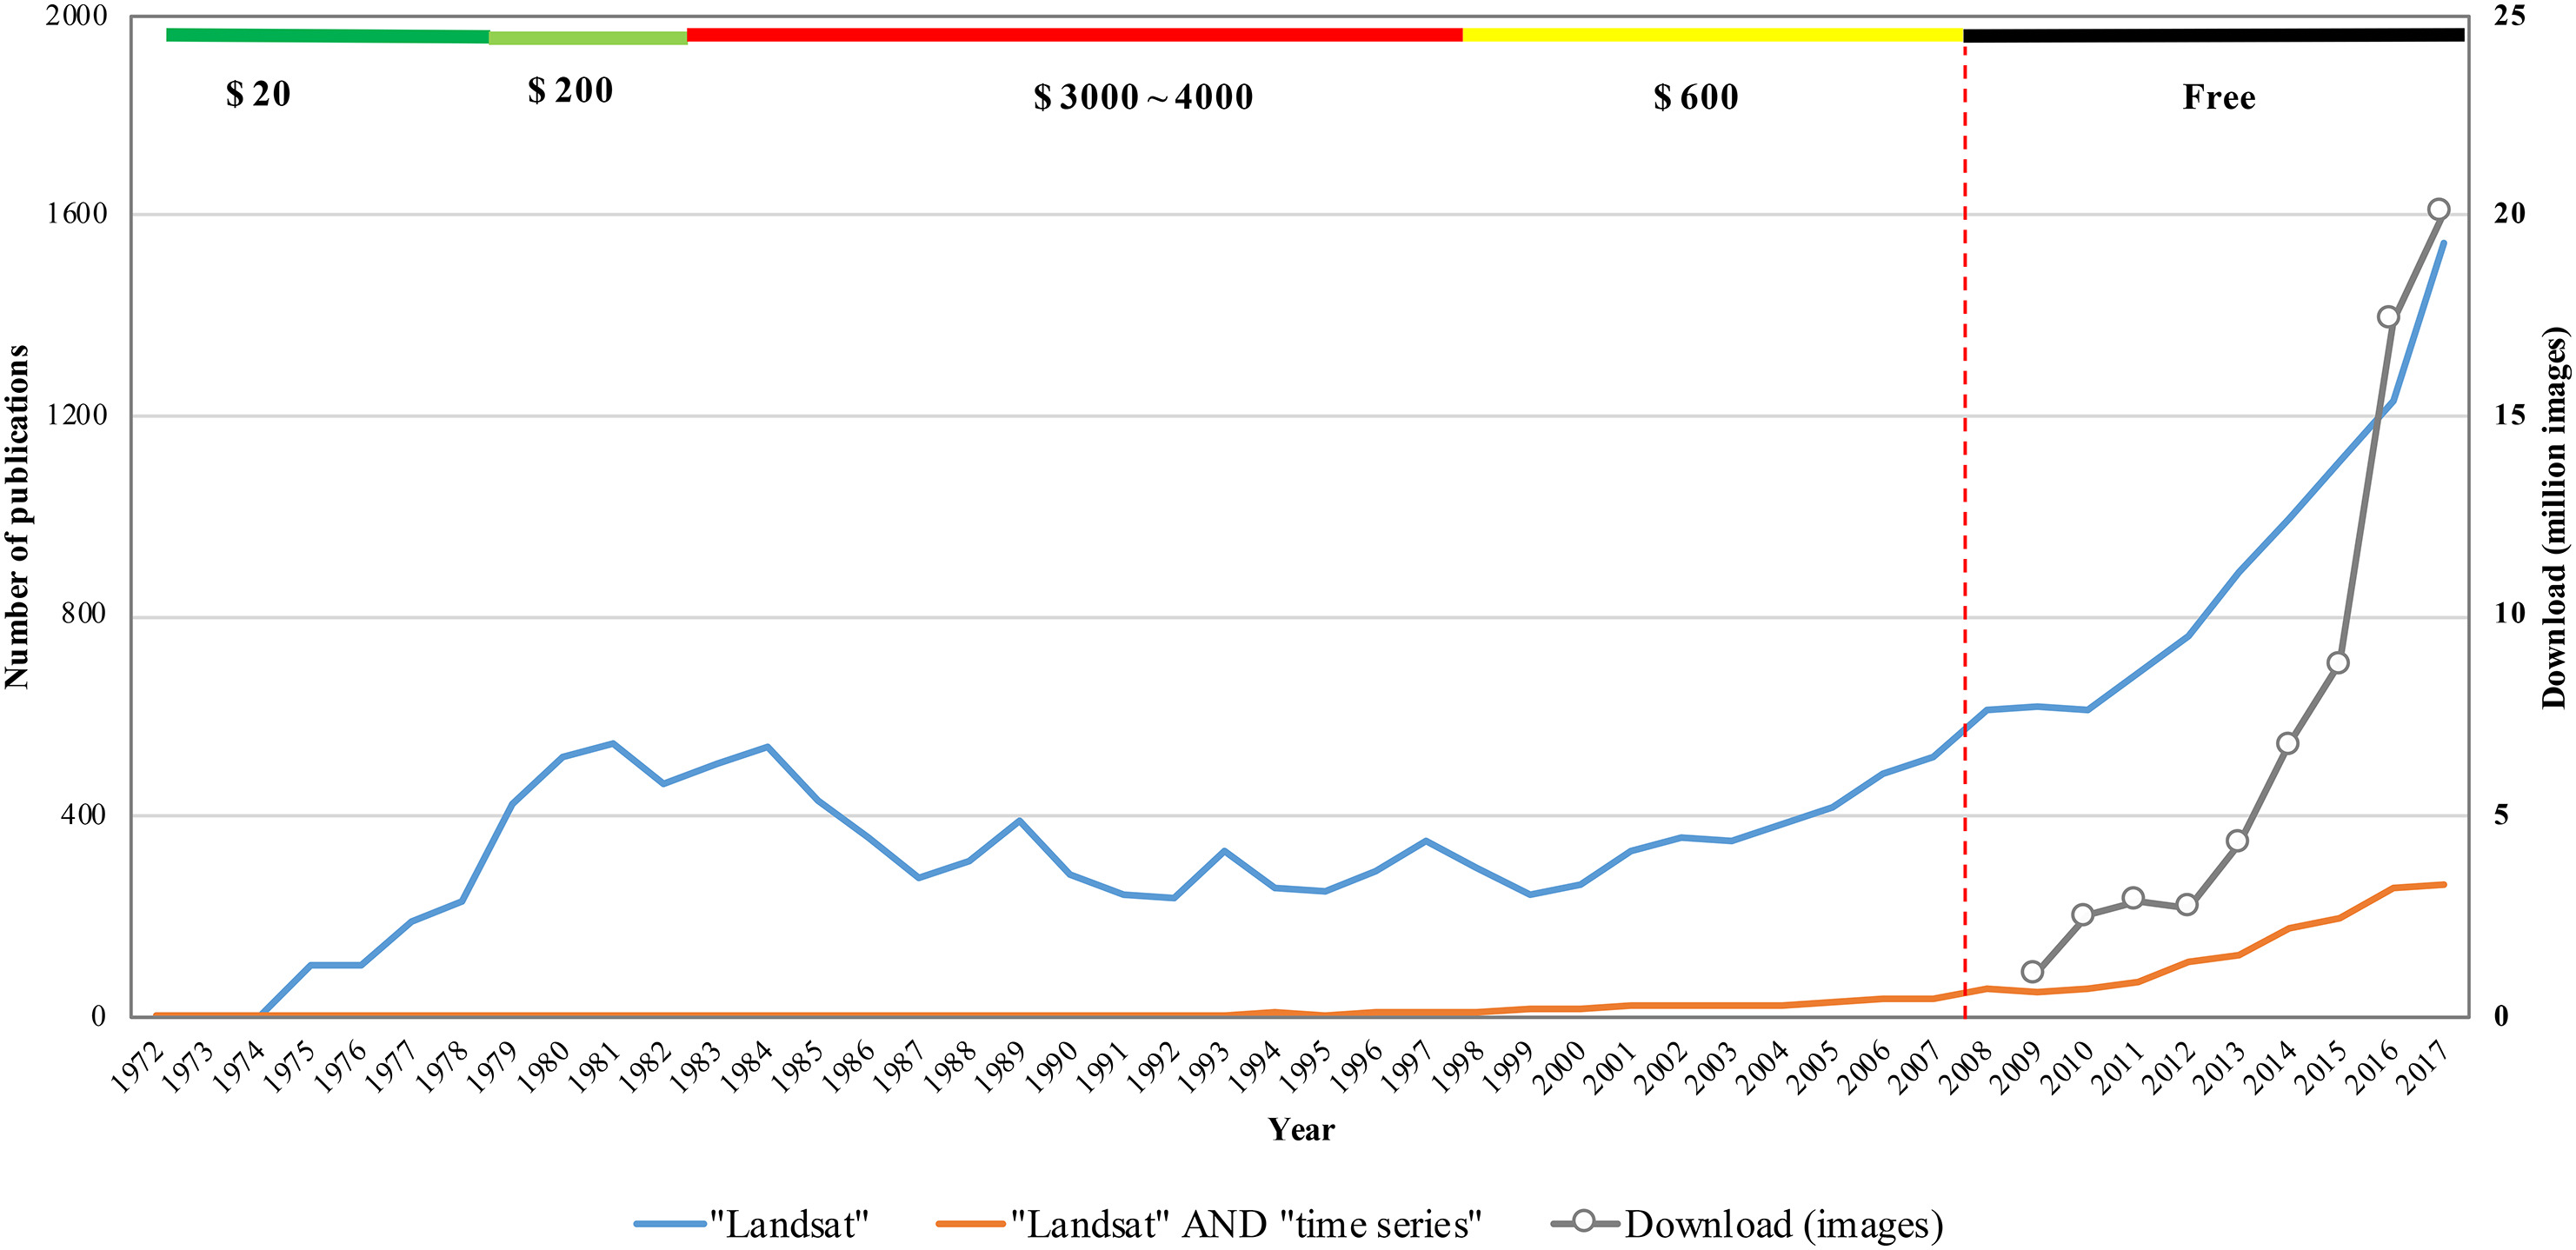 Landsat publications and downloads through time